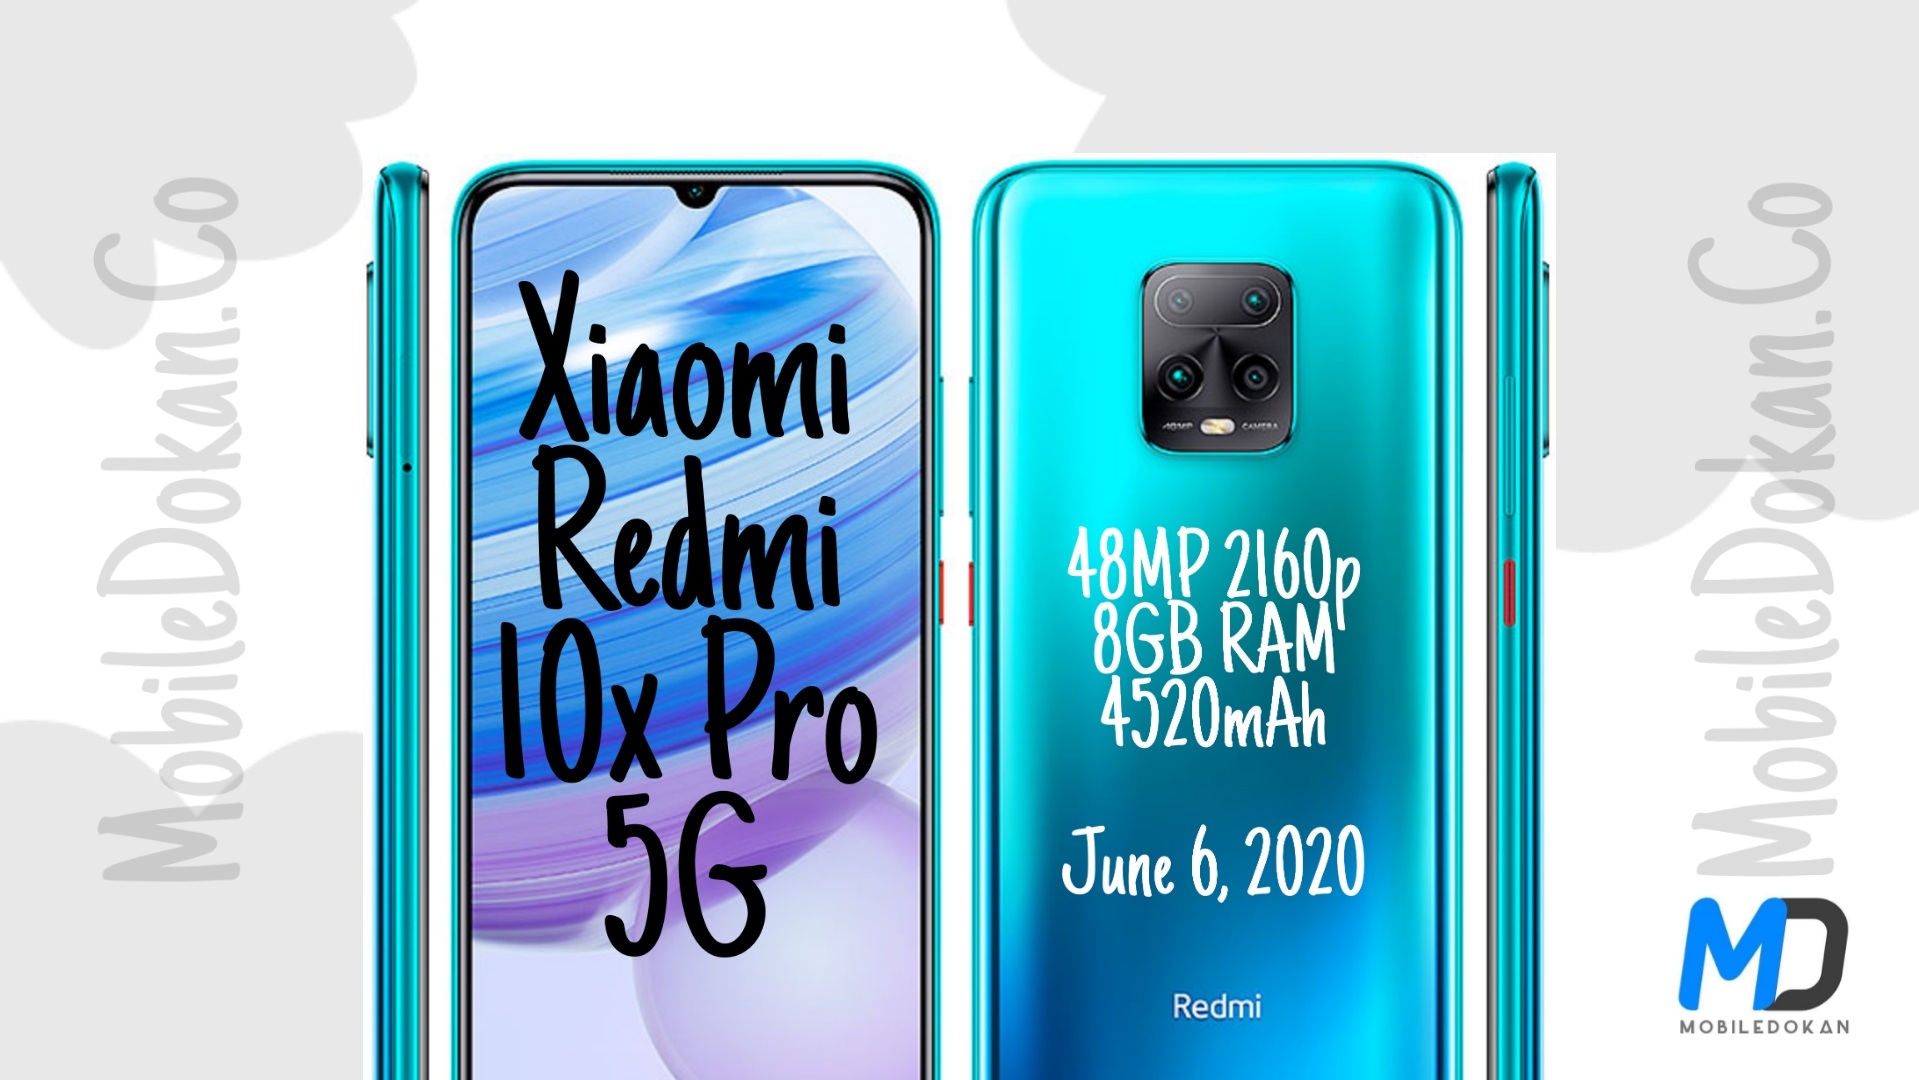 Xiaomi Redmi 10X Pro 5G Price in Bangladesh